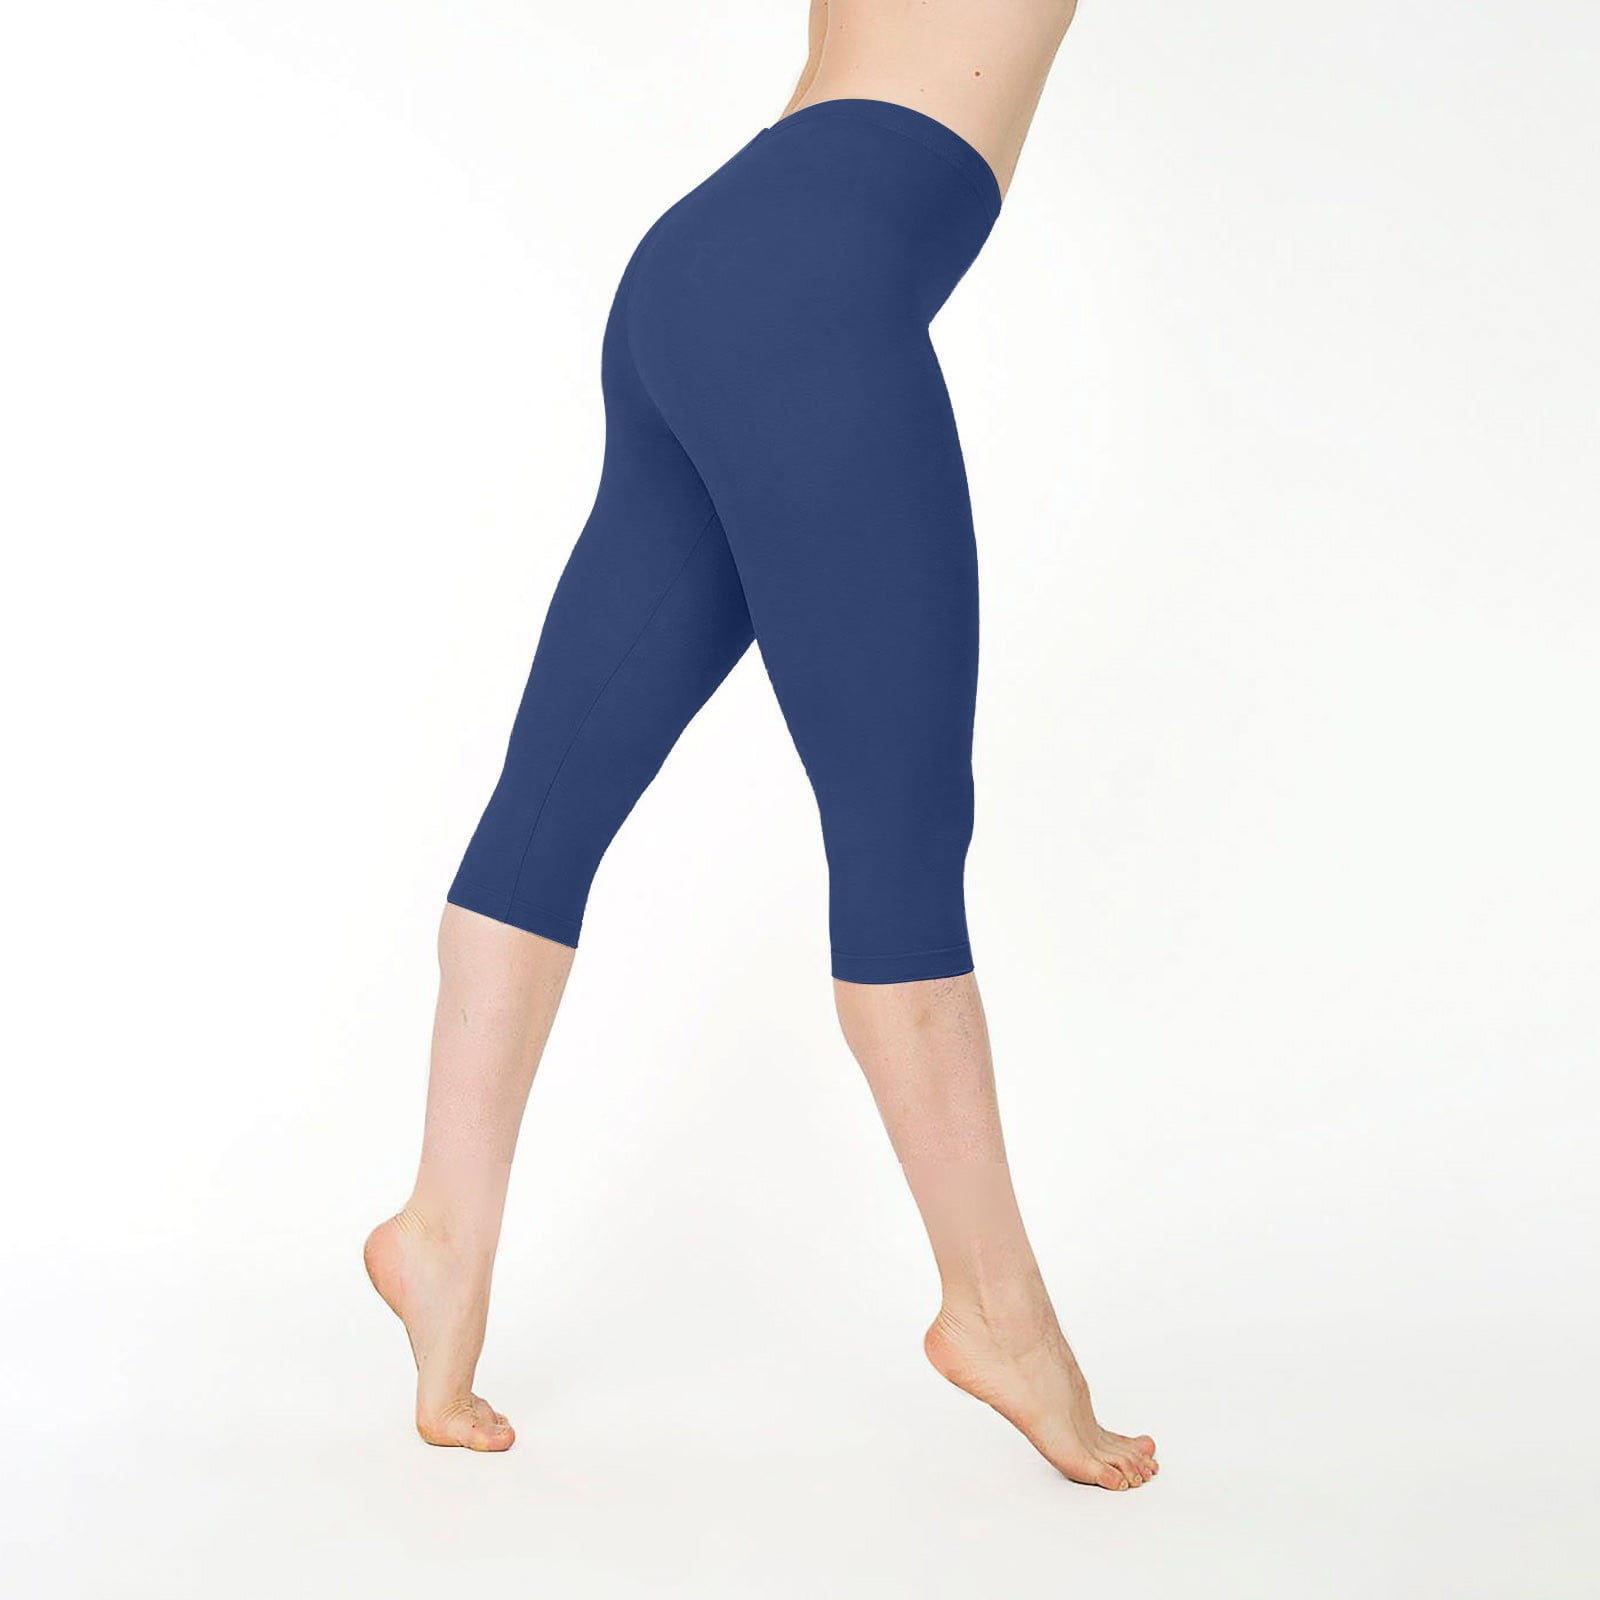 Khaki pants for women Women Warm Stretch Yoga Leggings High Waist Tight  Sports Active Pants Fragarn 